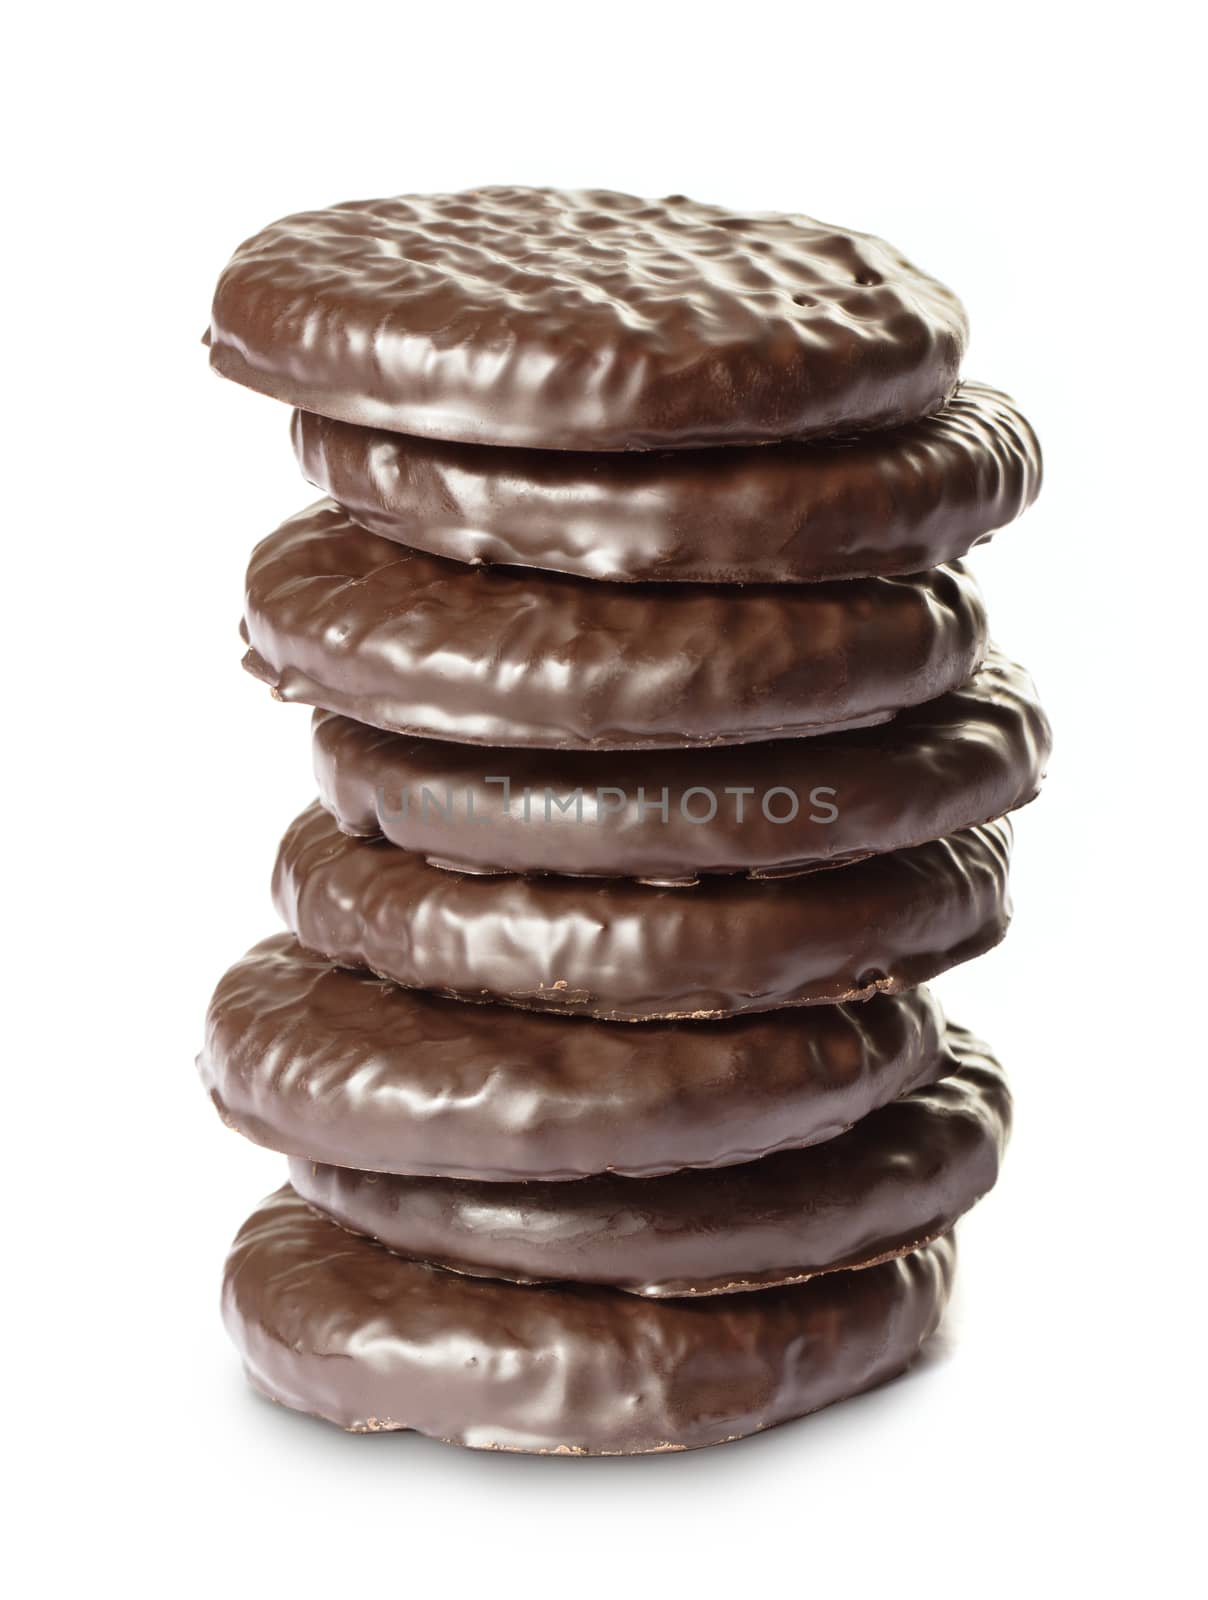 Chocolate cookies by Valengilda